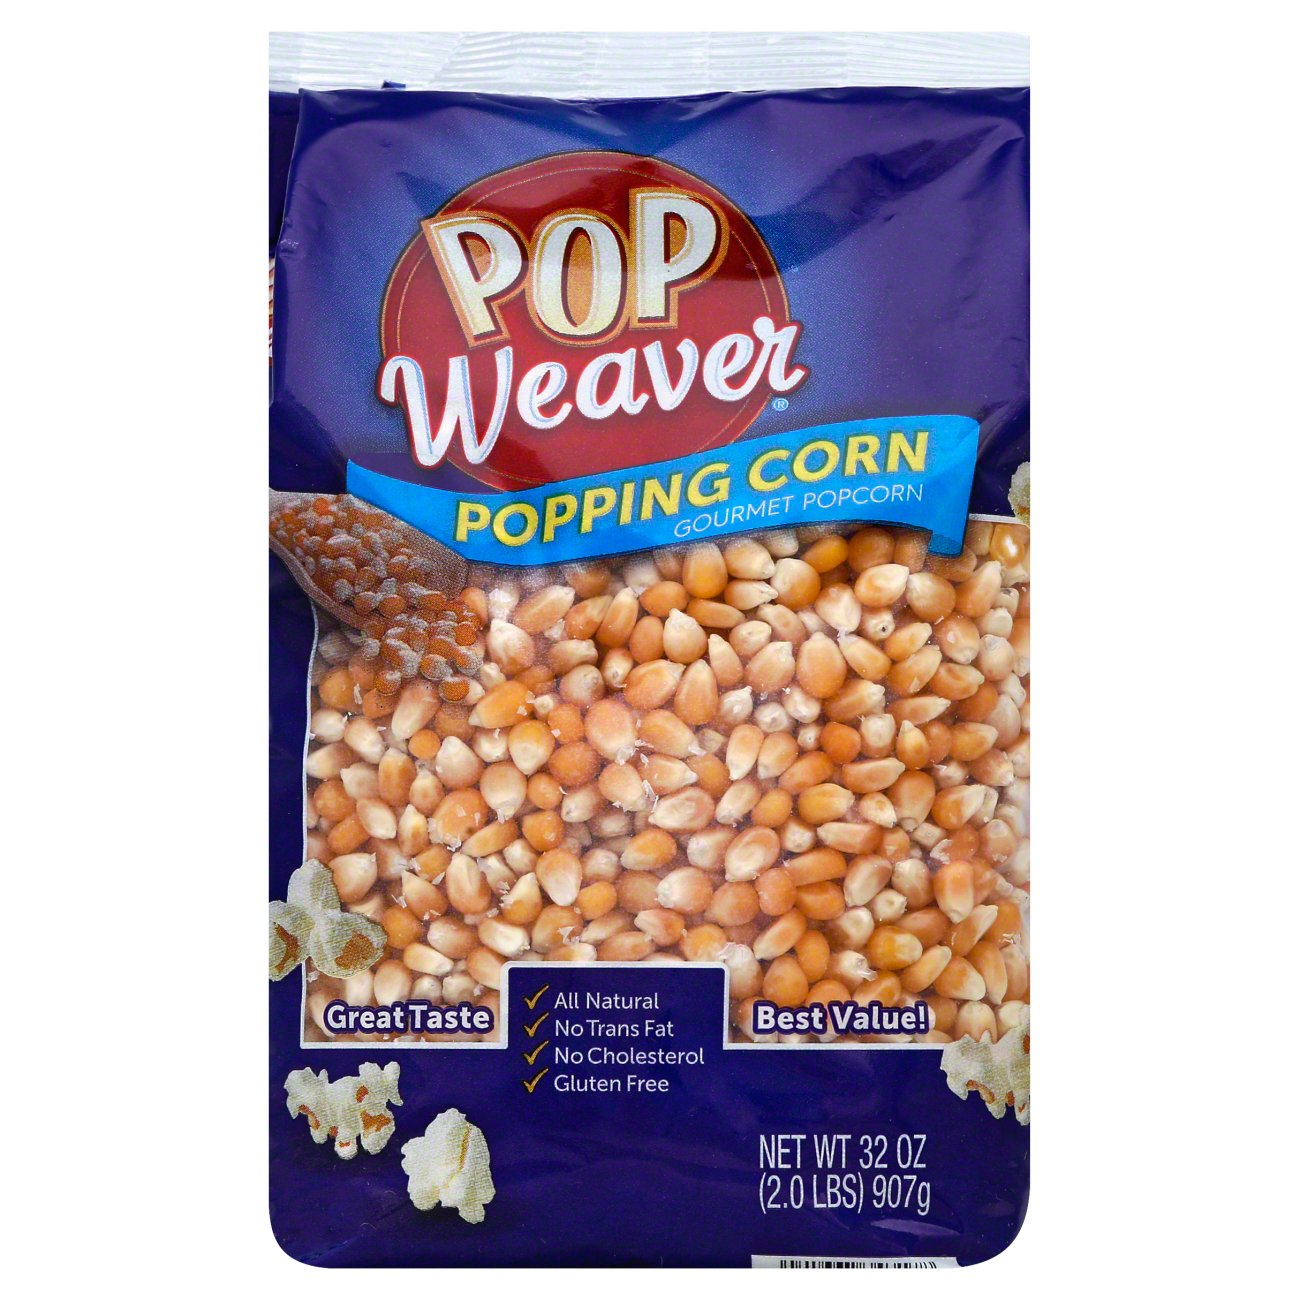 Pop Weaver Popping Corn - Shop Popcorn at H-E-B